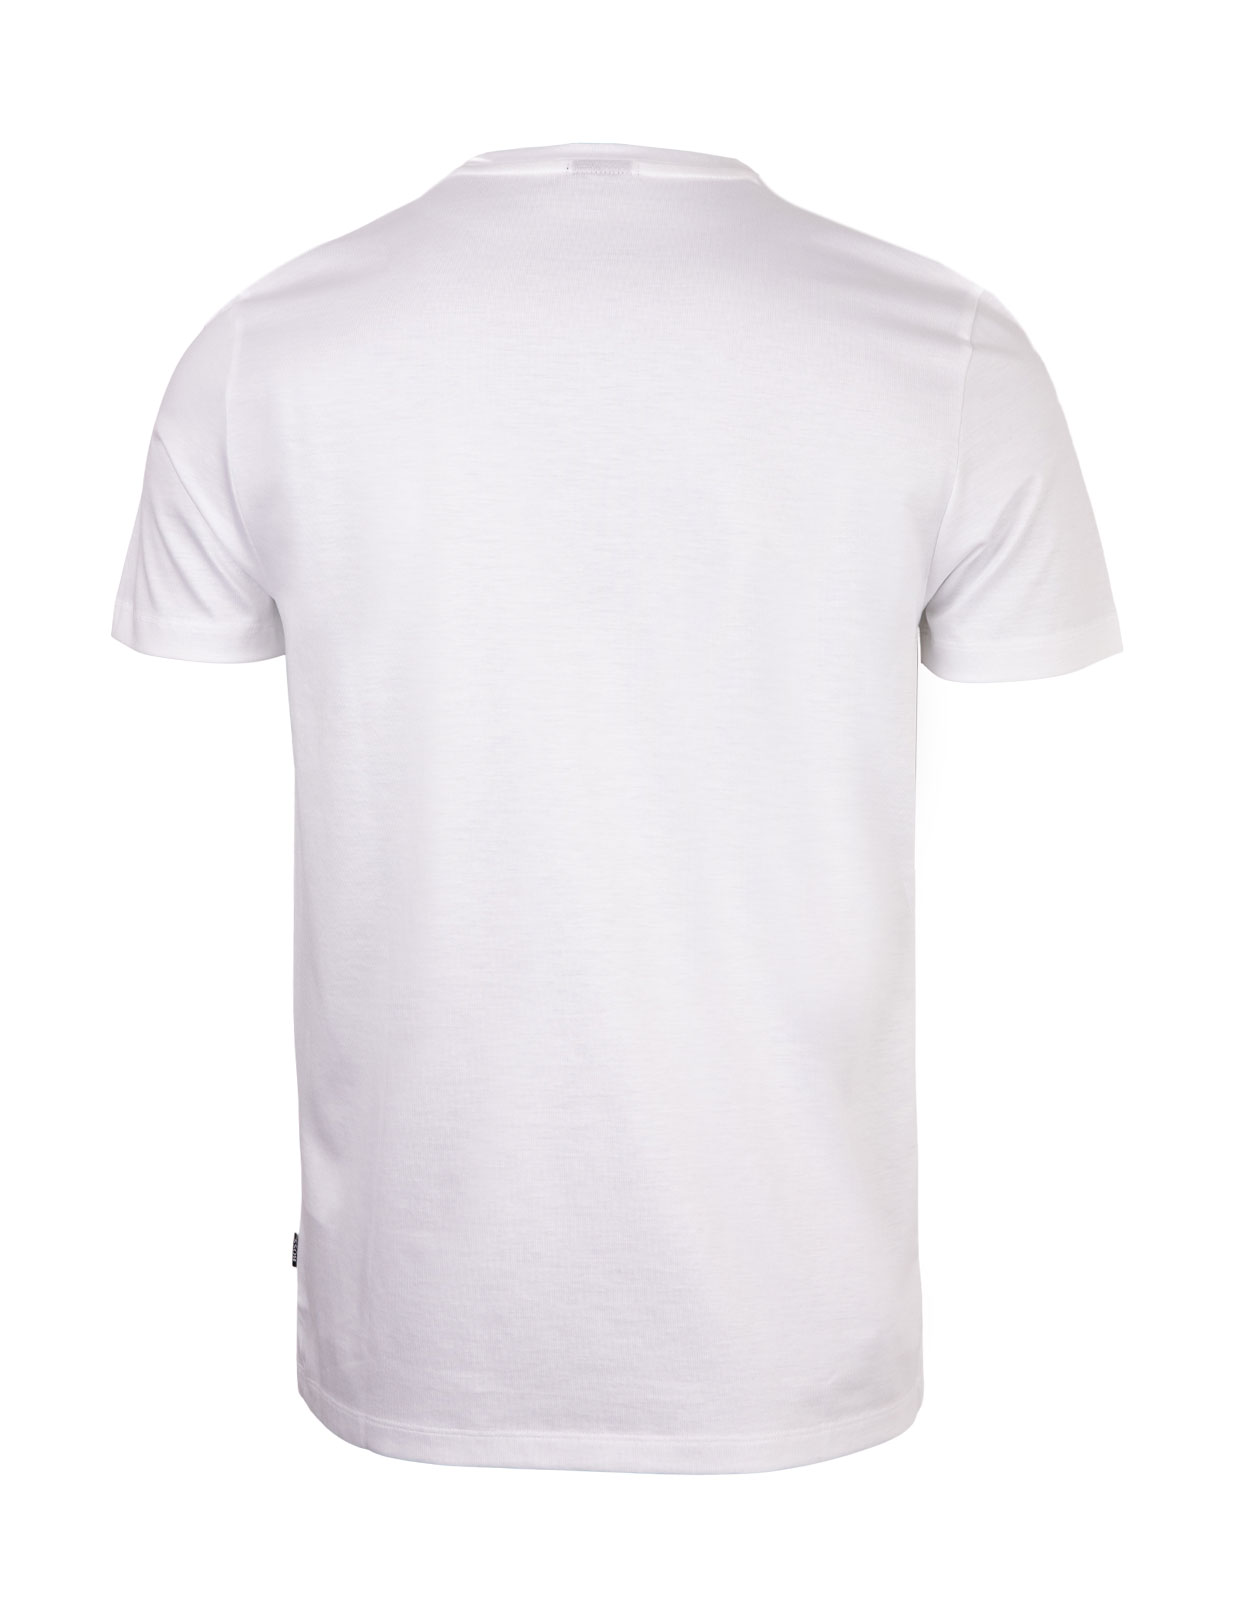 Tessler T-shirt Cotton White Stl XXL